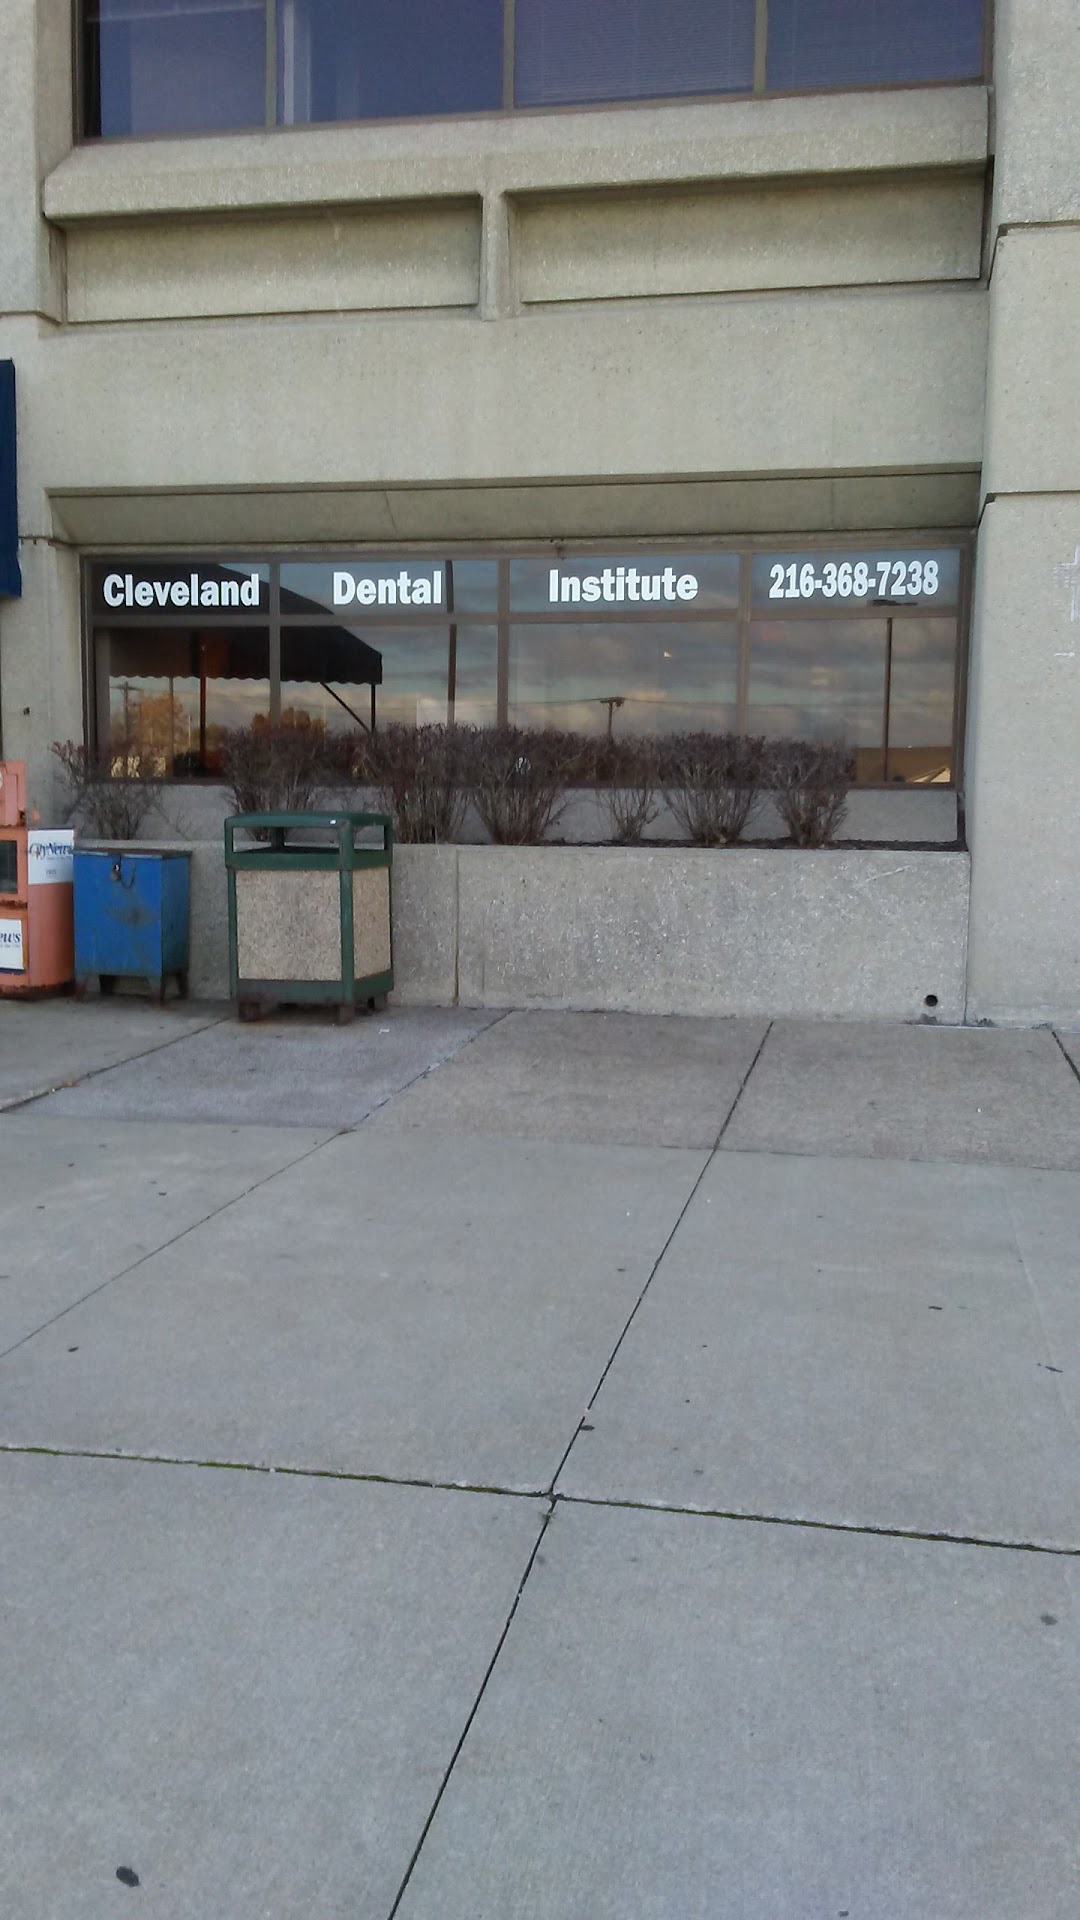 Cleveland Dental Institute